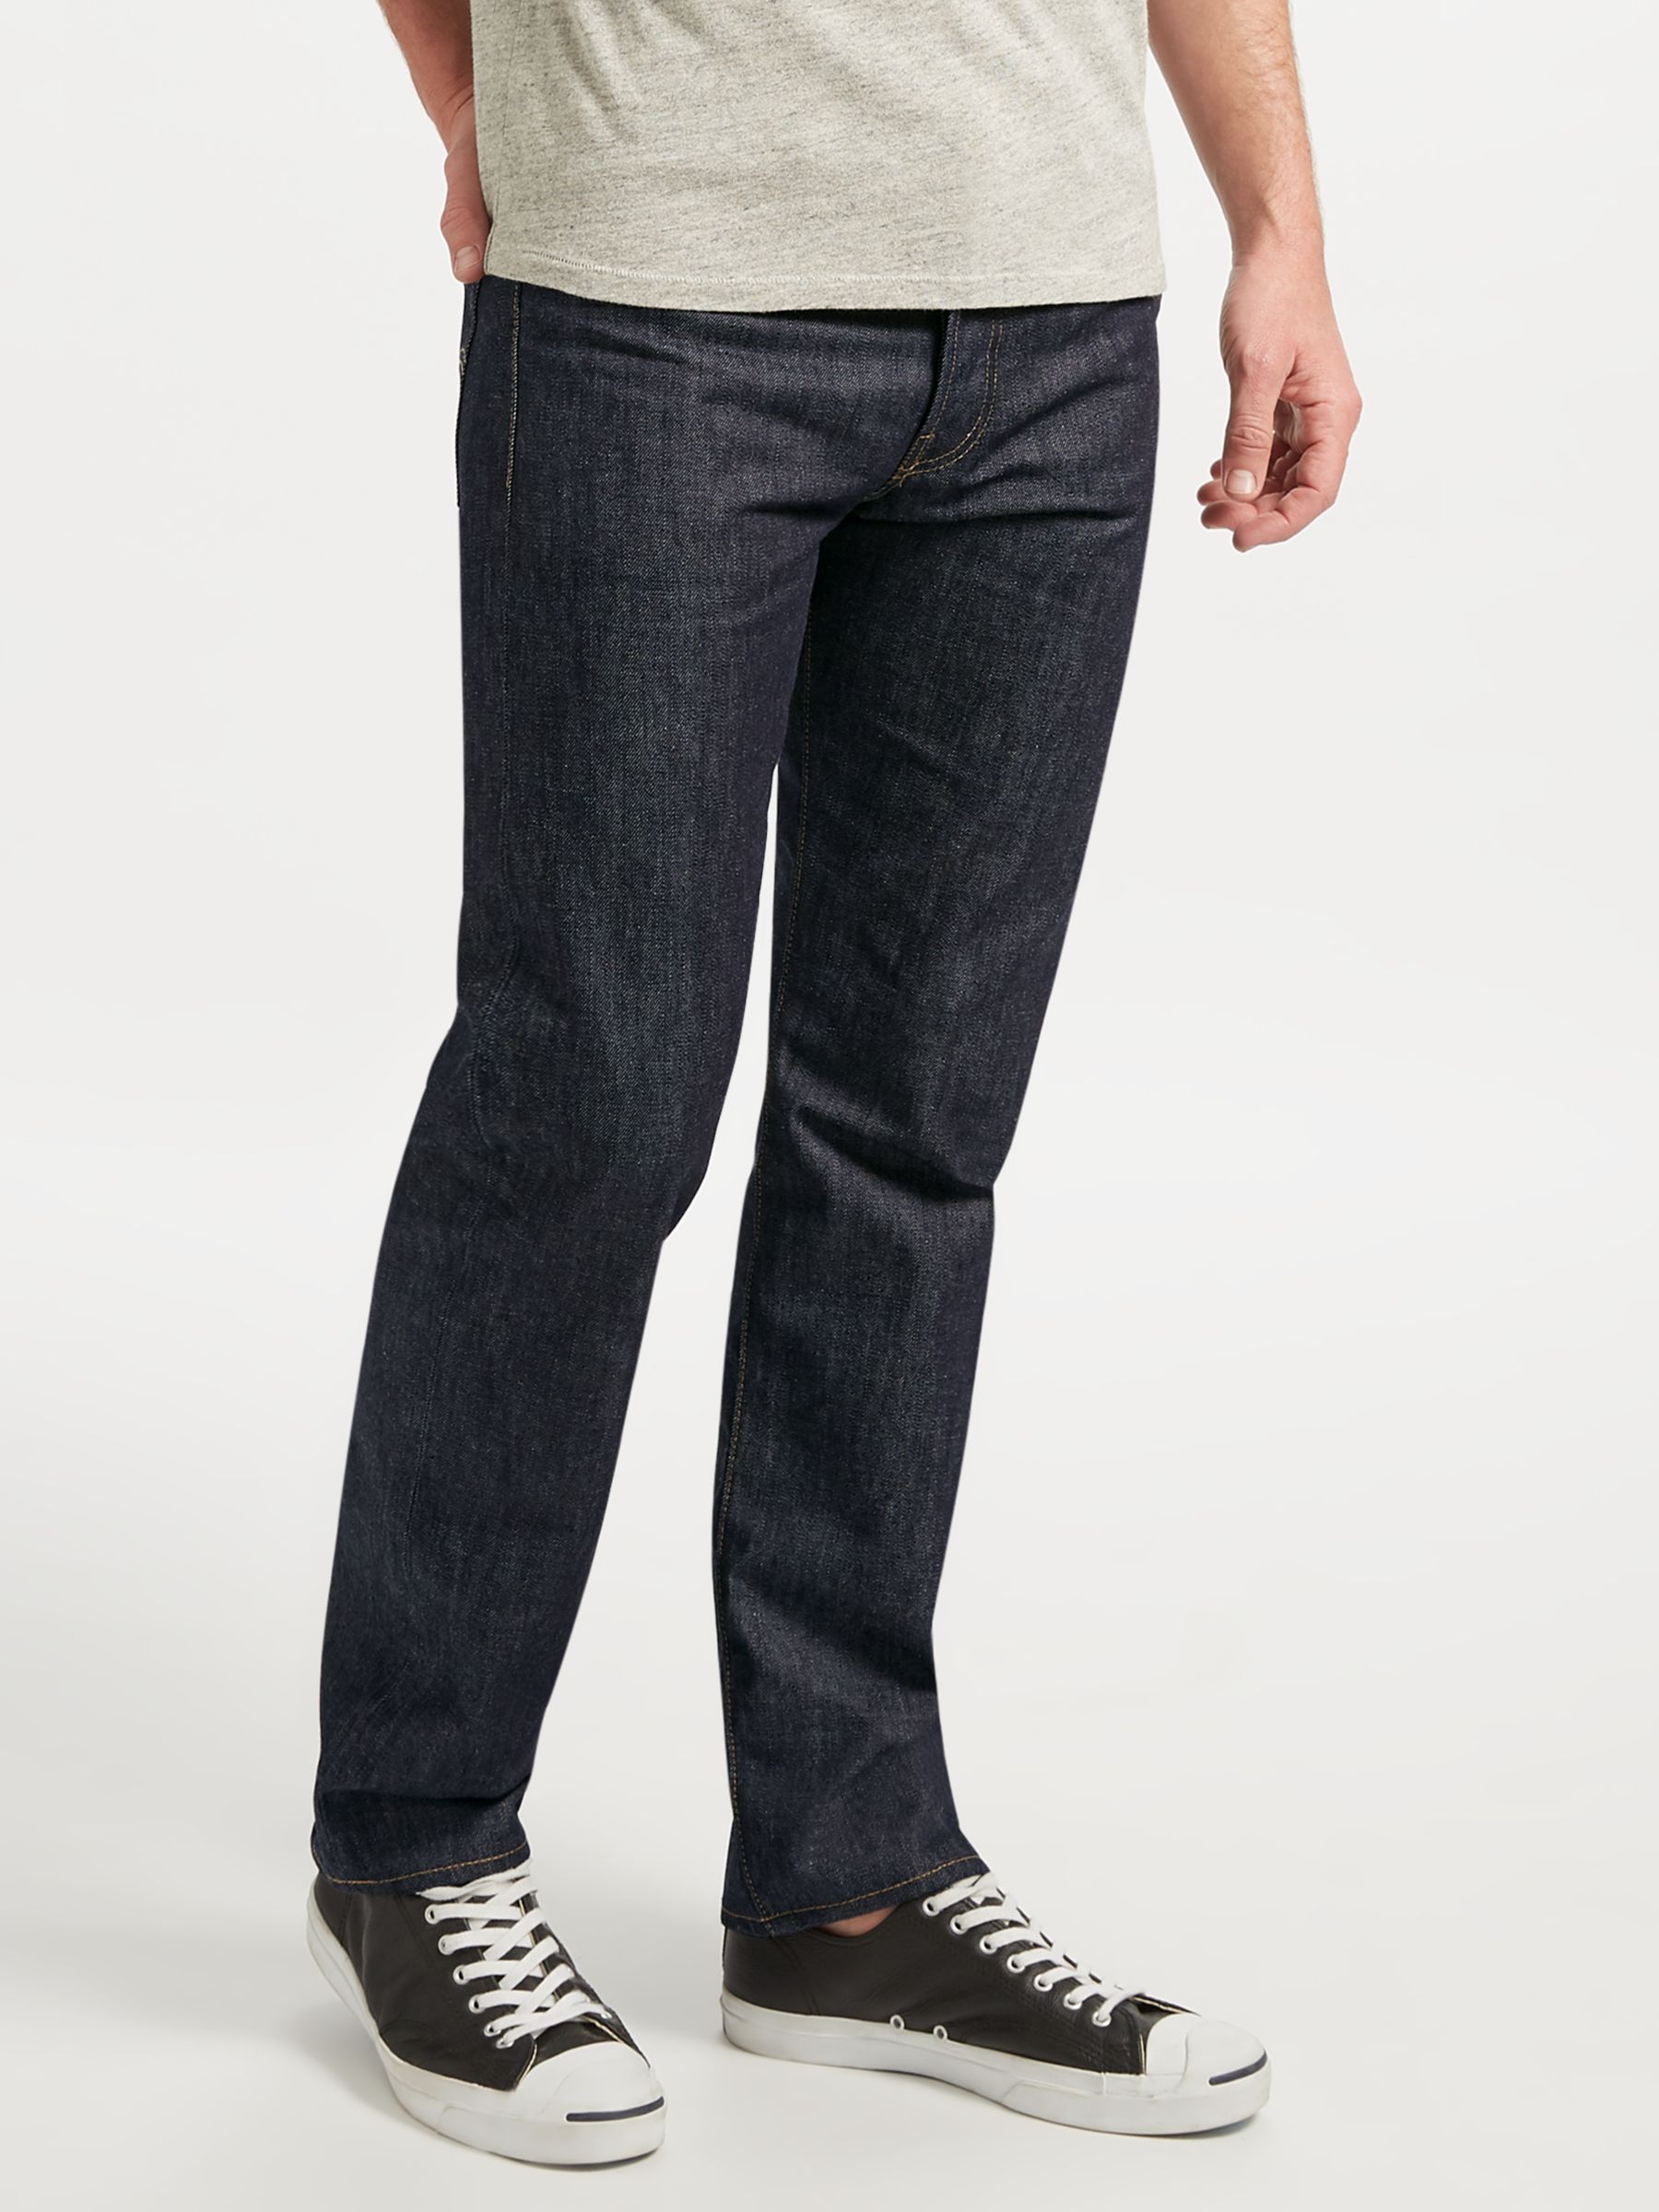 Levi's 501 Straight Leg Selvedge Jeans, Denim